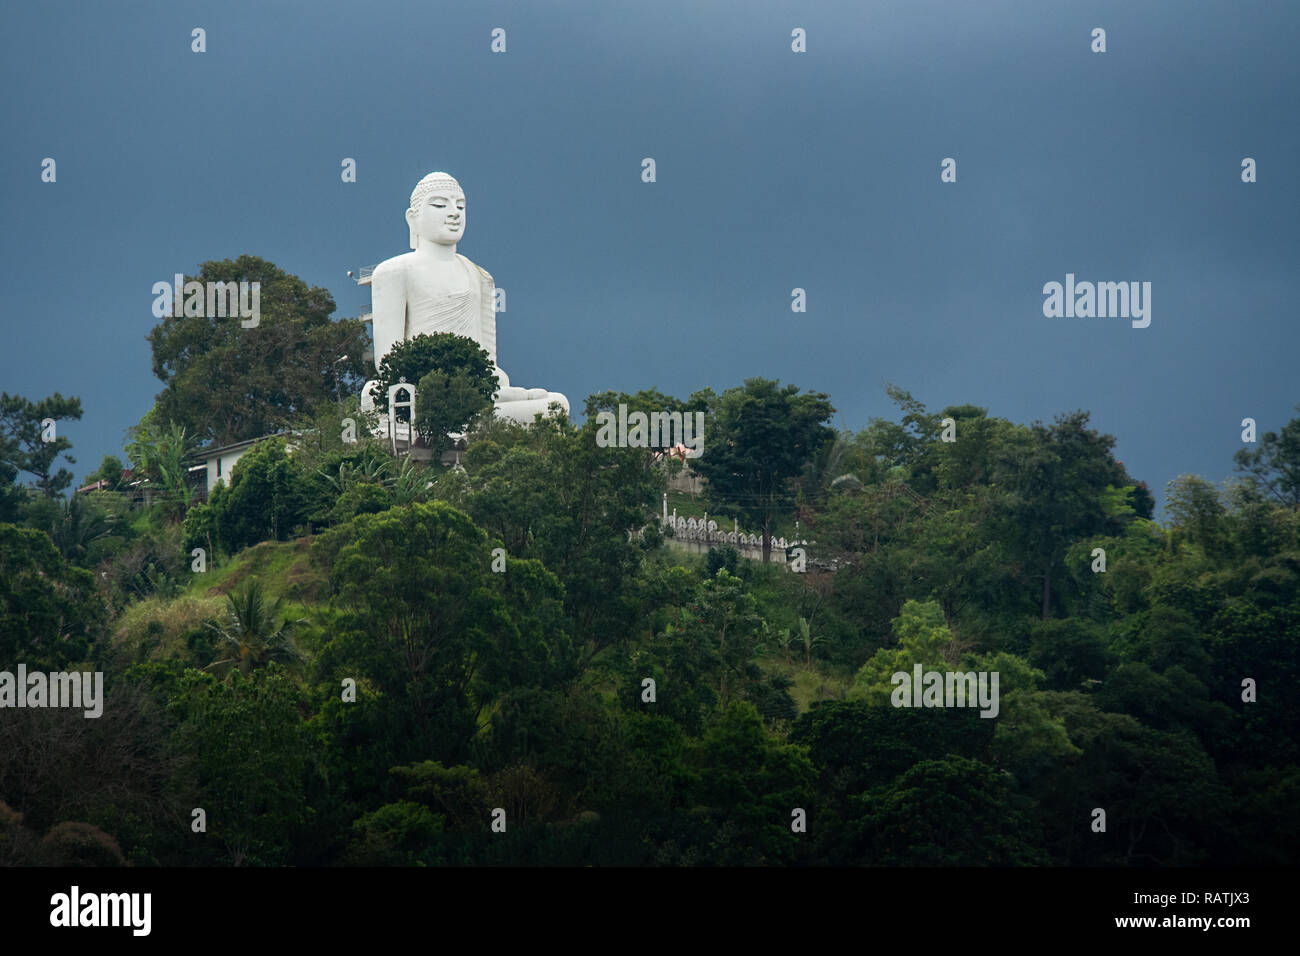 The 26.83 m (88.0 ft) tall sitting Buddha statue at the Sri Maha Bodhi Viharaya temple, in Kandy, Sri Lanka. Stock Photo